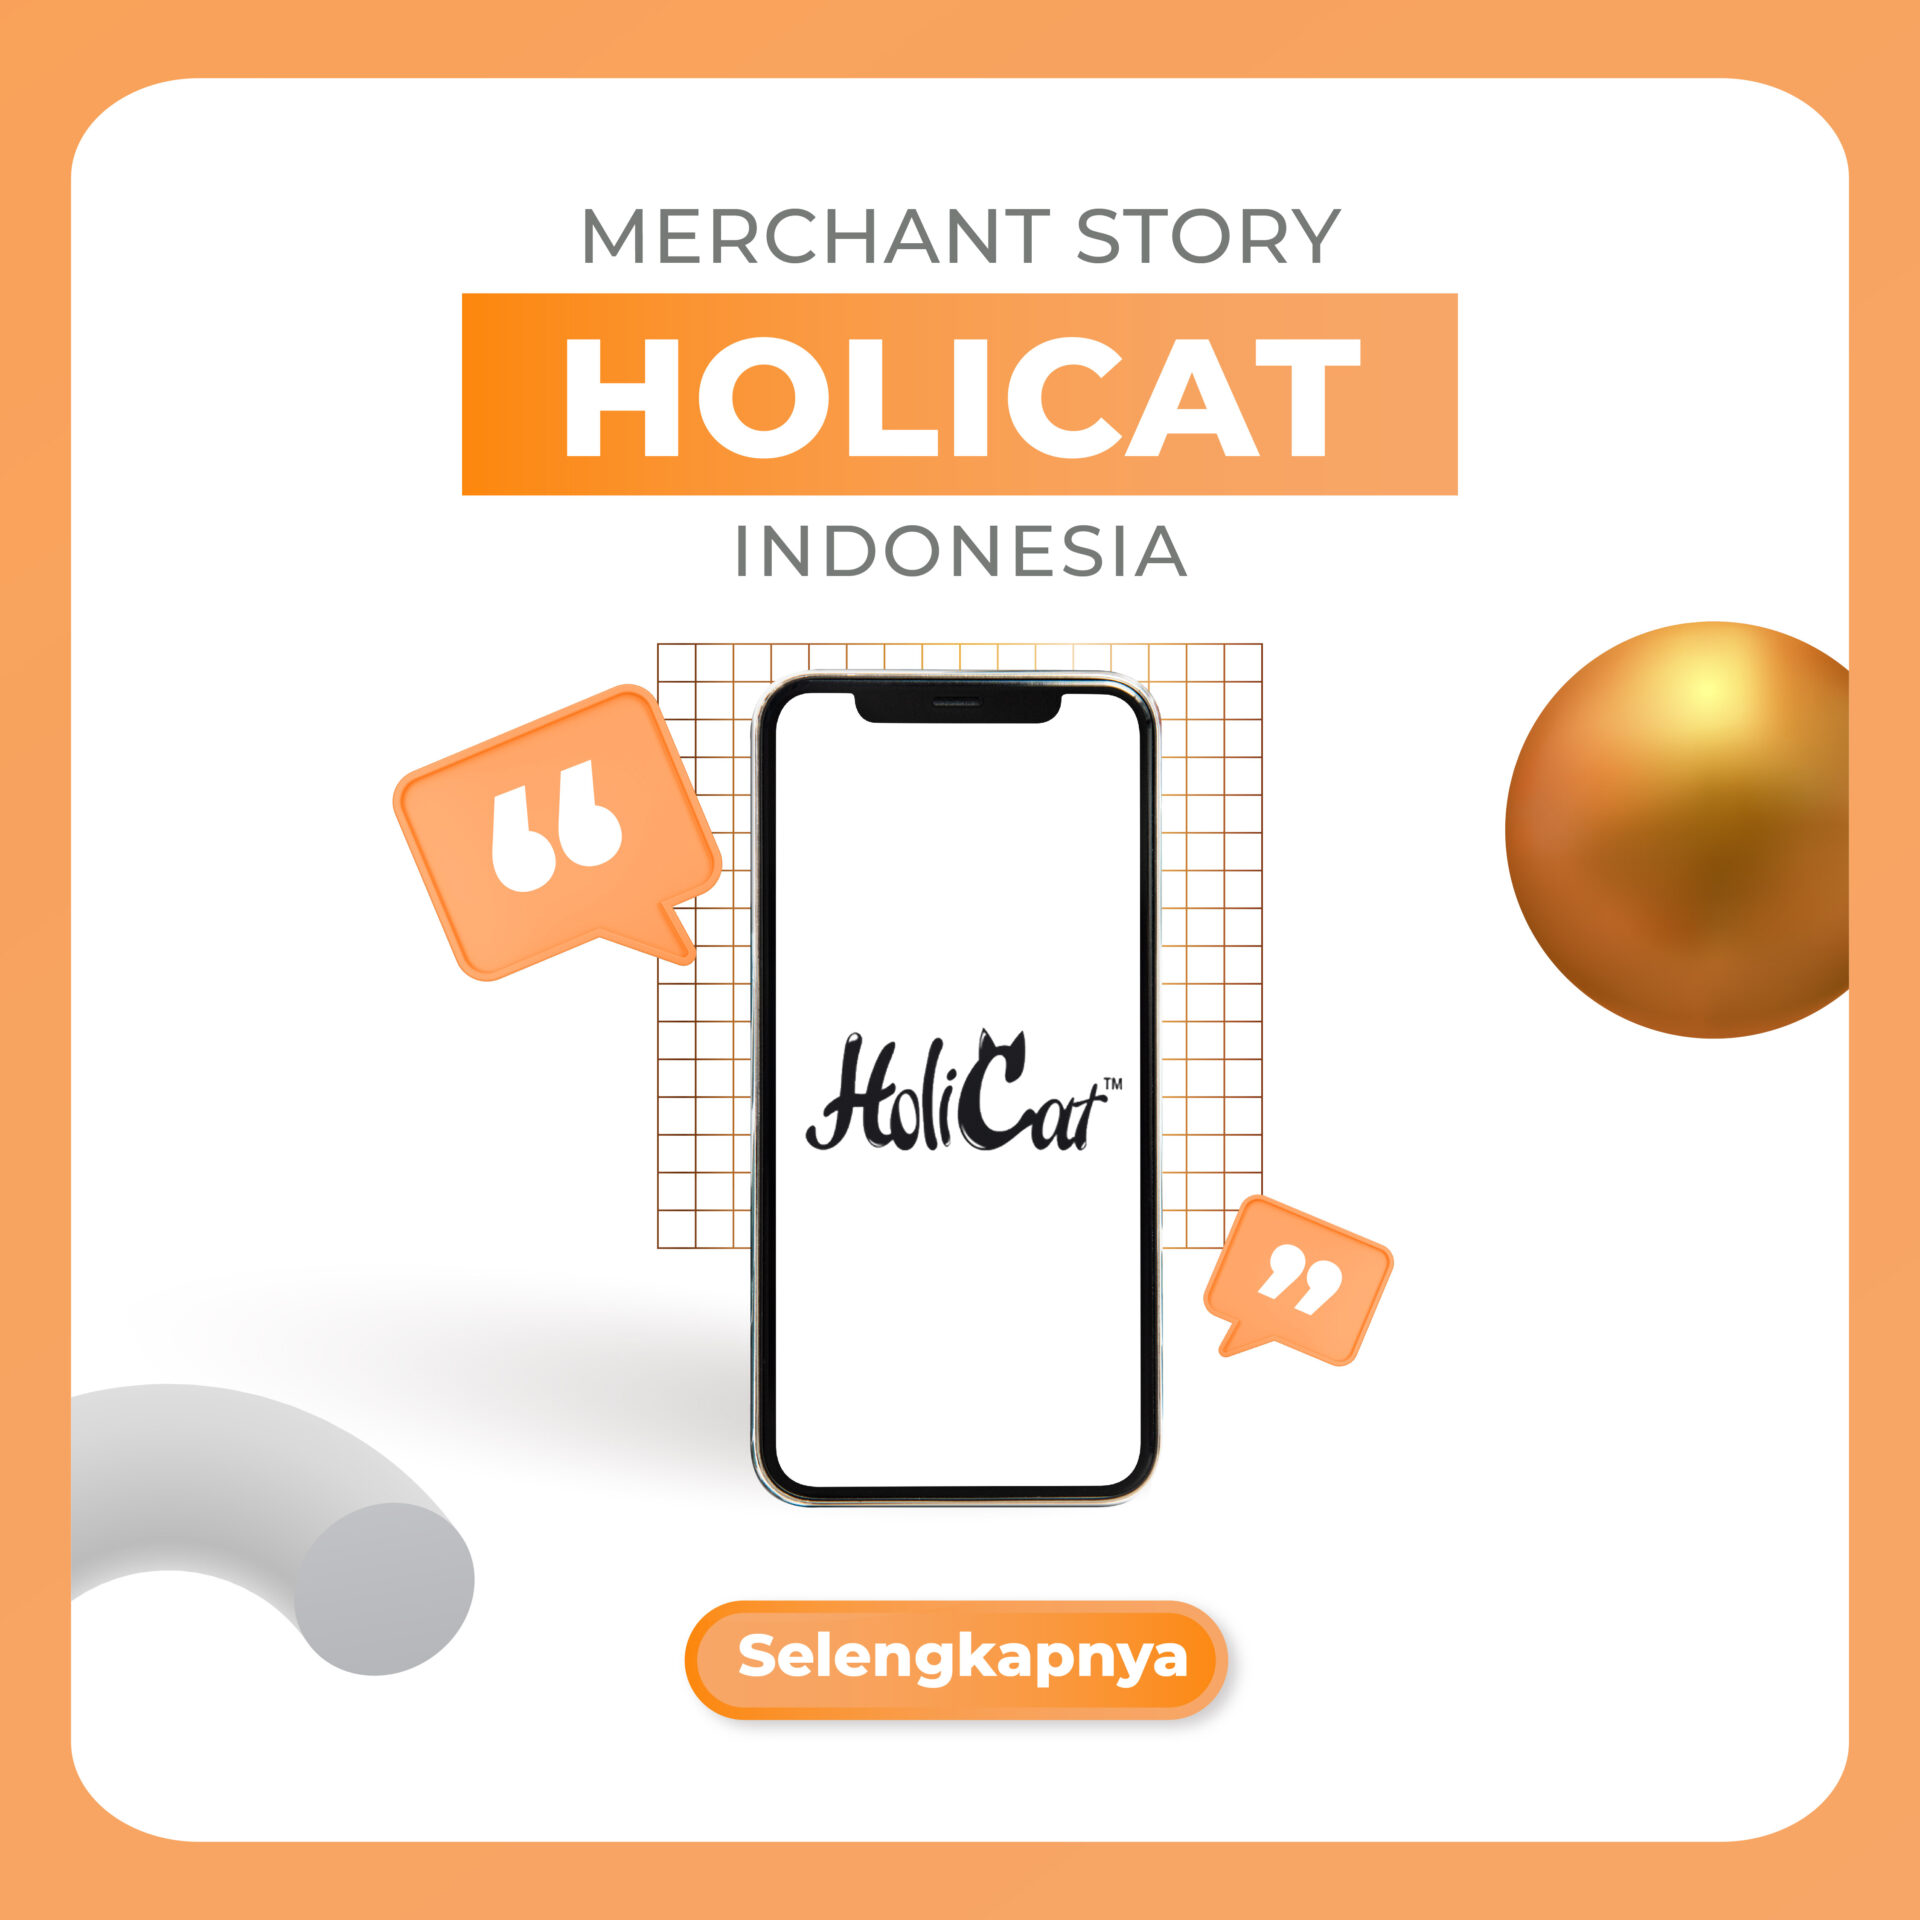 Bagaimana Cerita Holicat Indonesia Setelah Menggunakan Faspay? #MerchantStory